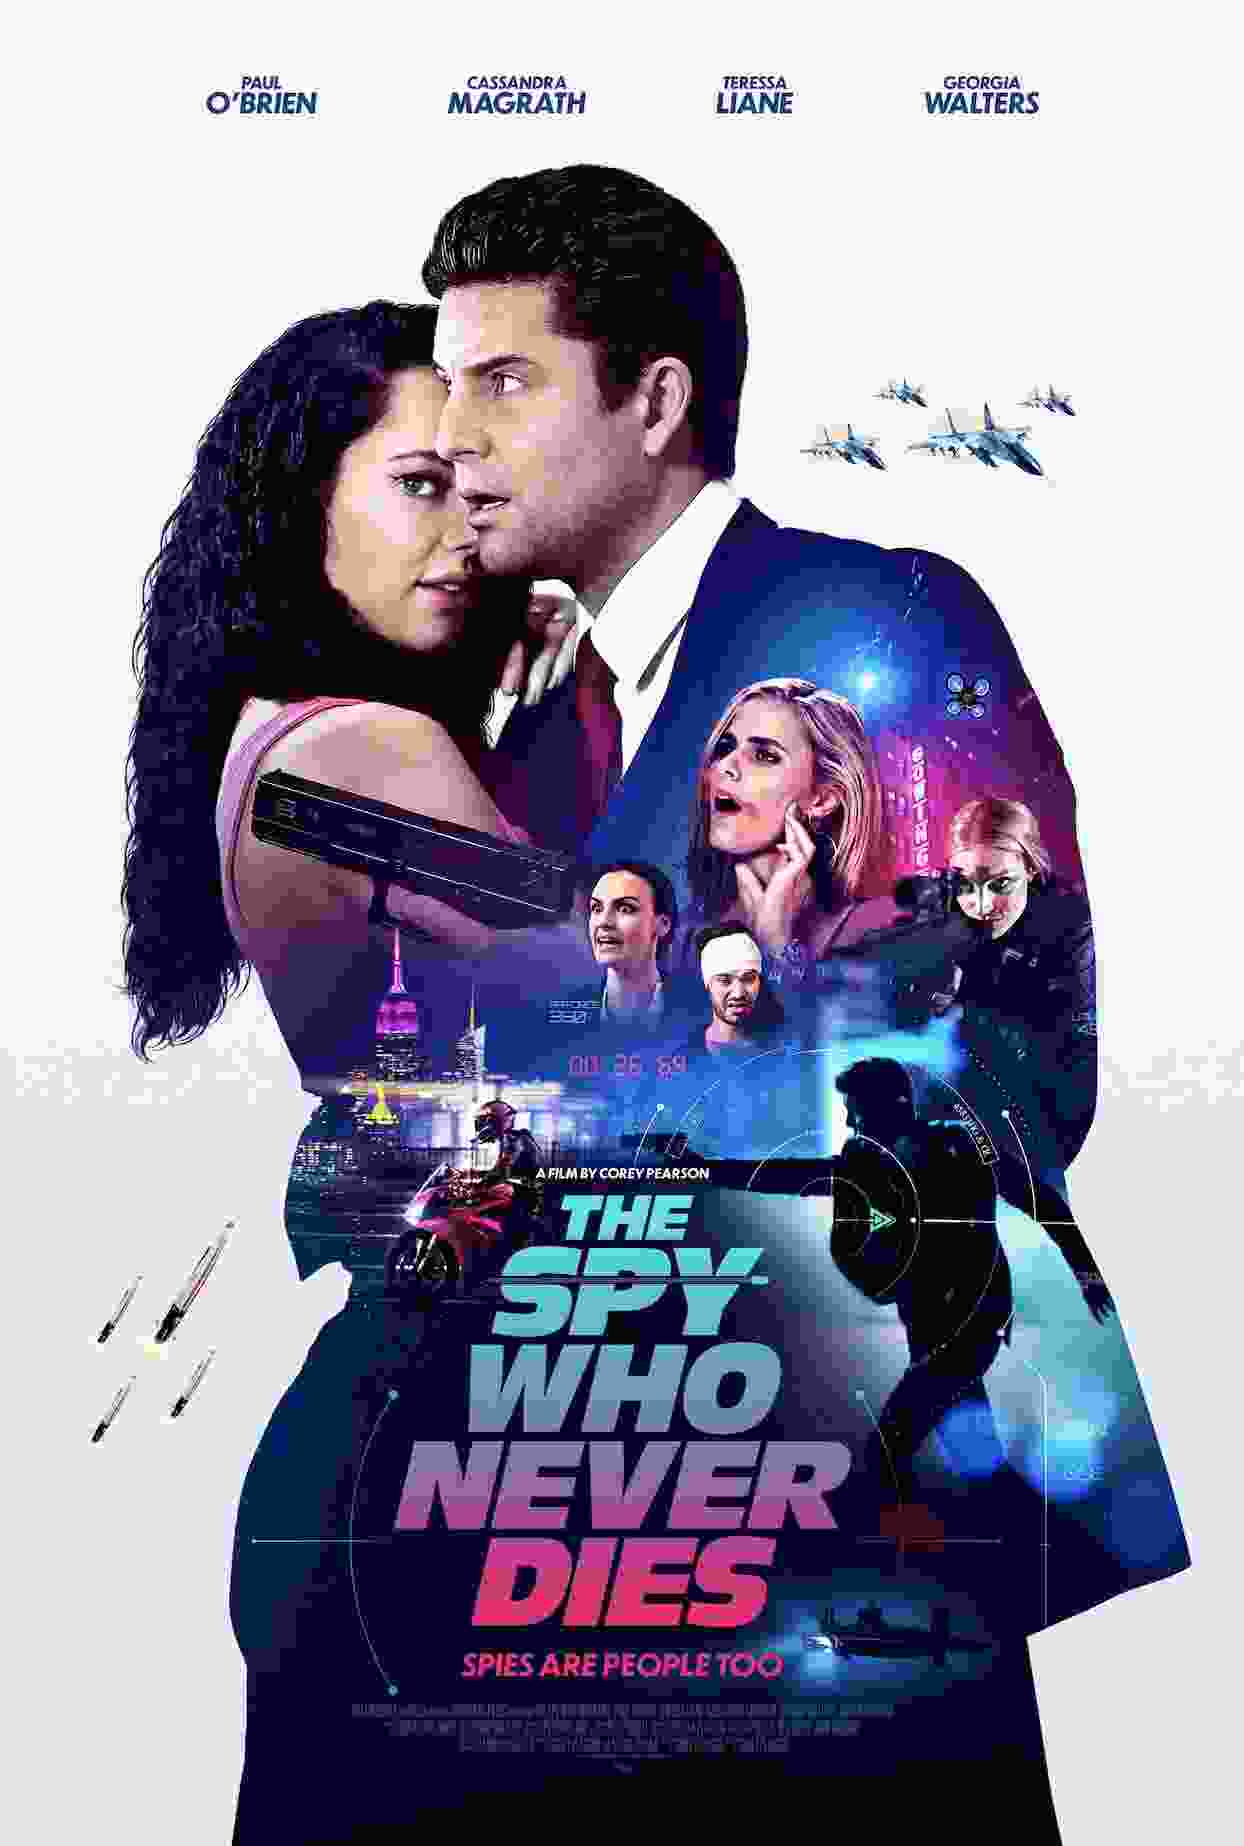 The Spy Who Never Dies (2022) vj muba Teressa Liane